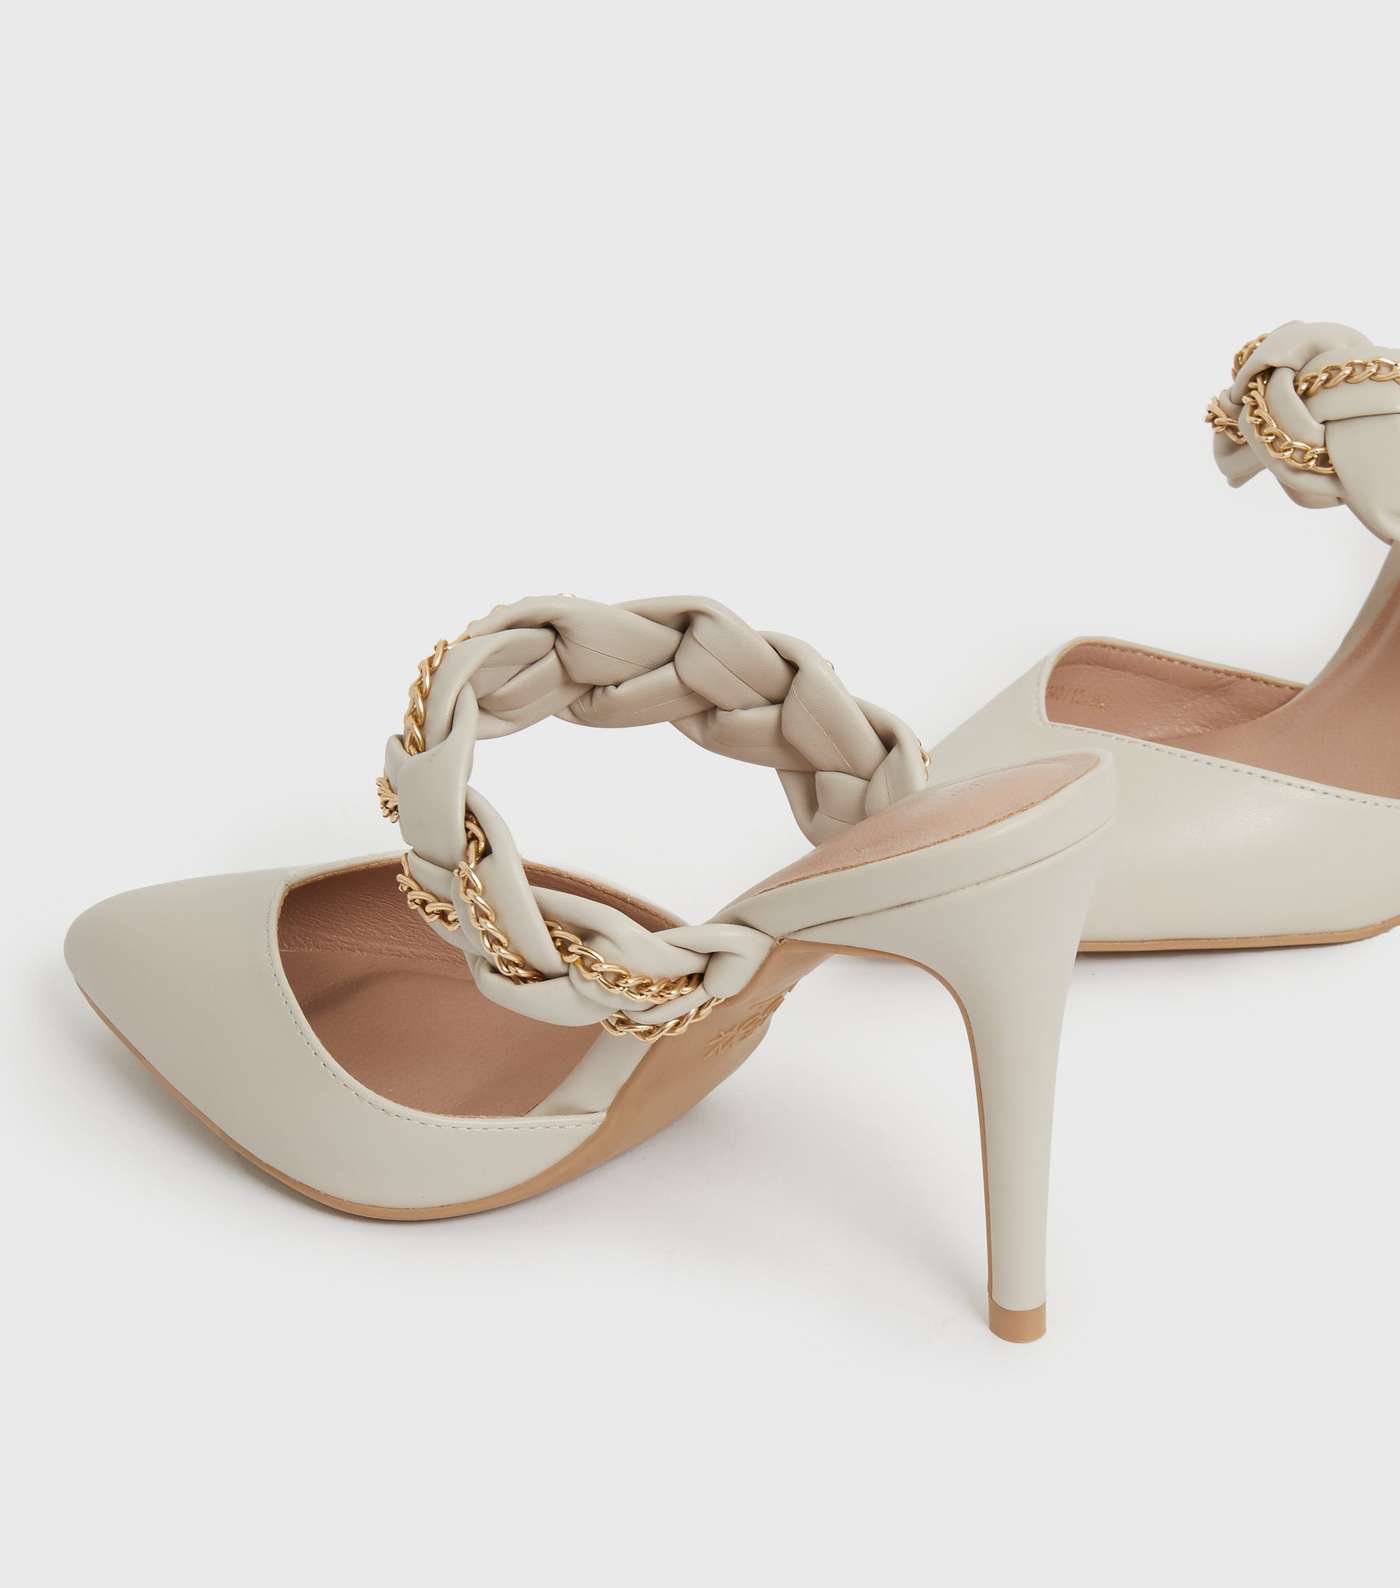 Off White Plaited Stiletto Heel Court Shoes Image 3